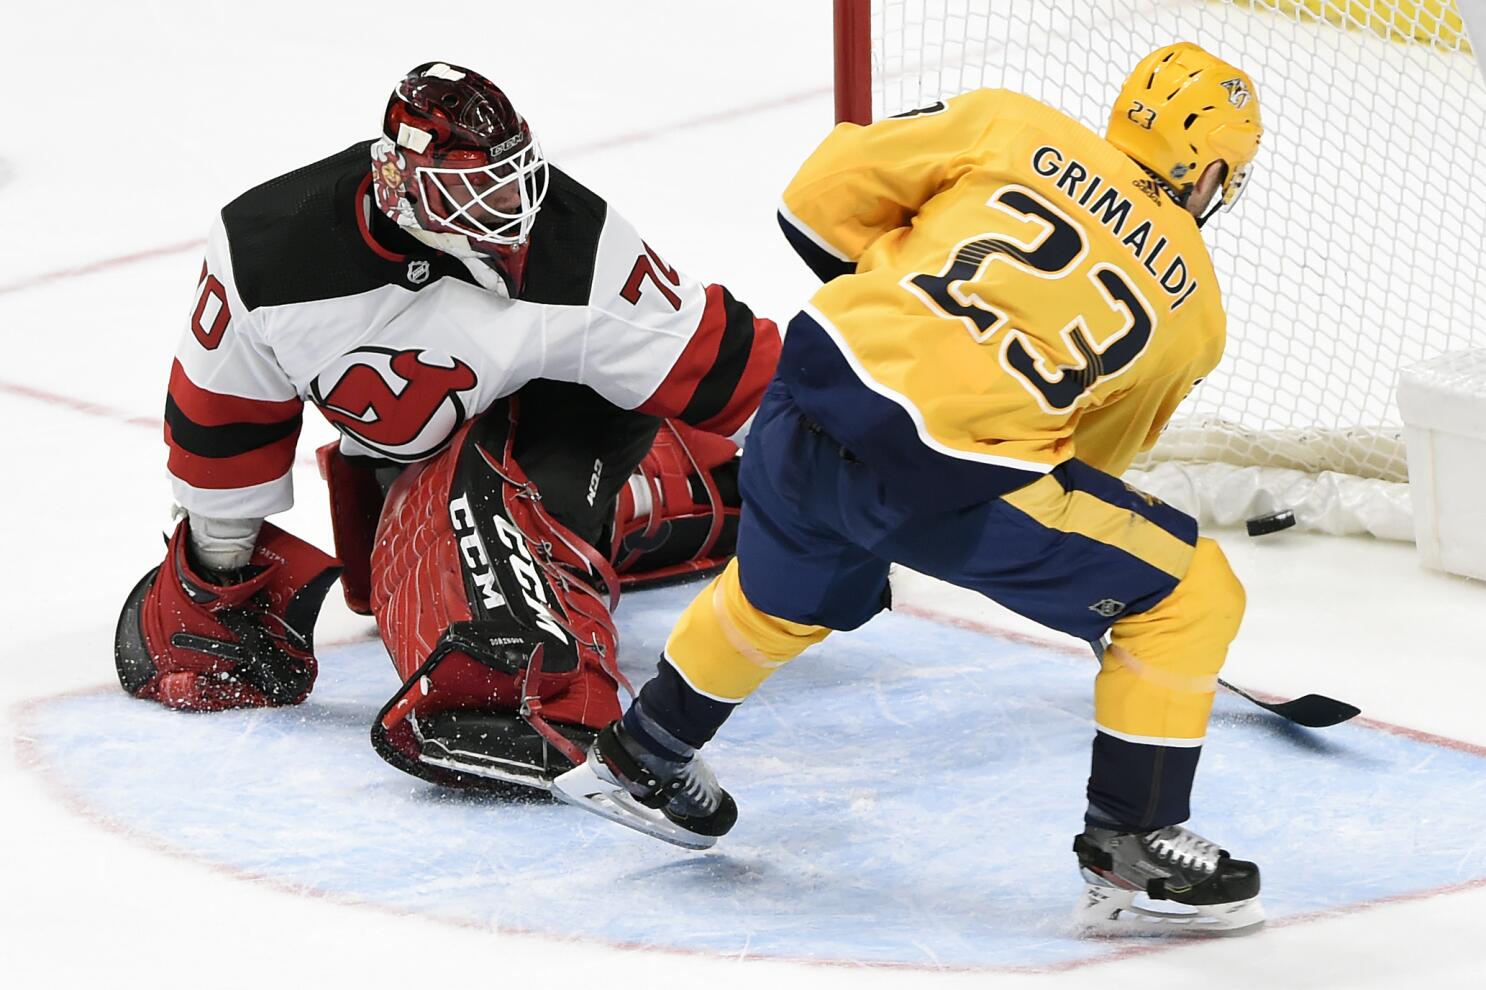 Nashville Predators goalie Pekka Rinne scores to help seal victory in  Chicago